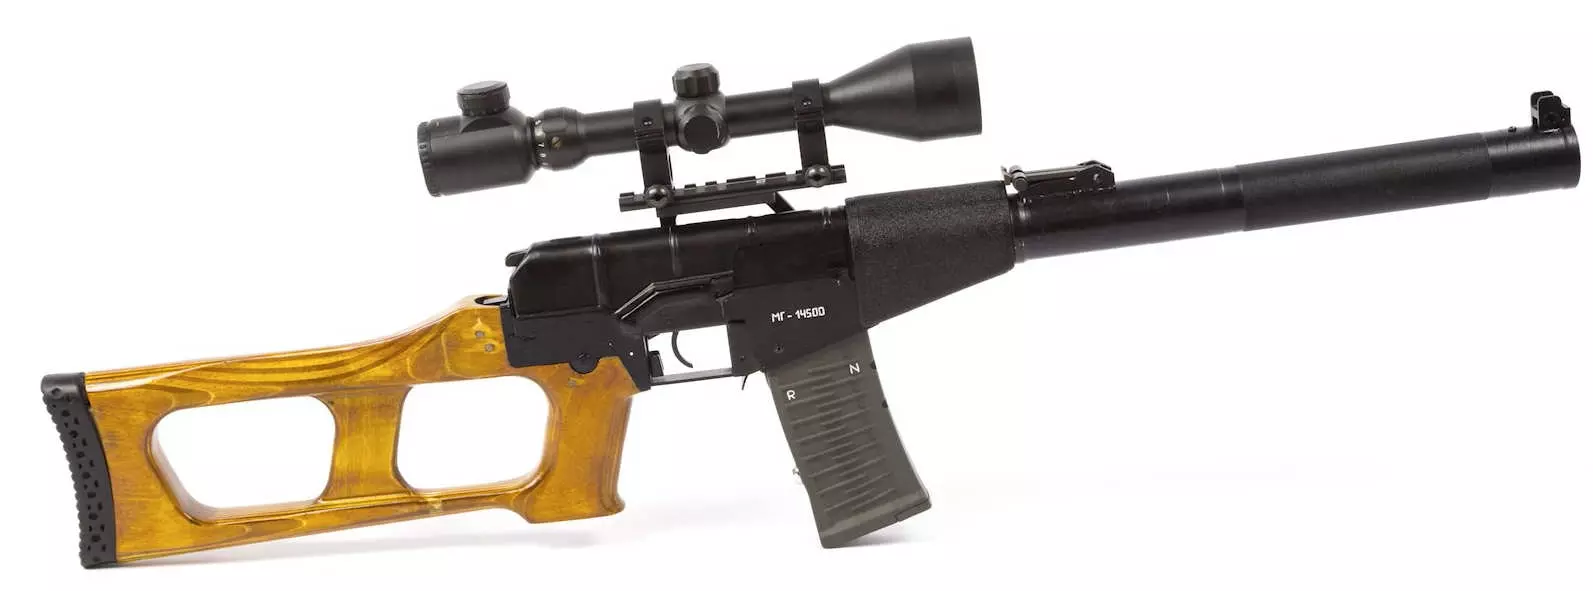 VSS Vintorez laser tag sniper rifle